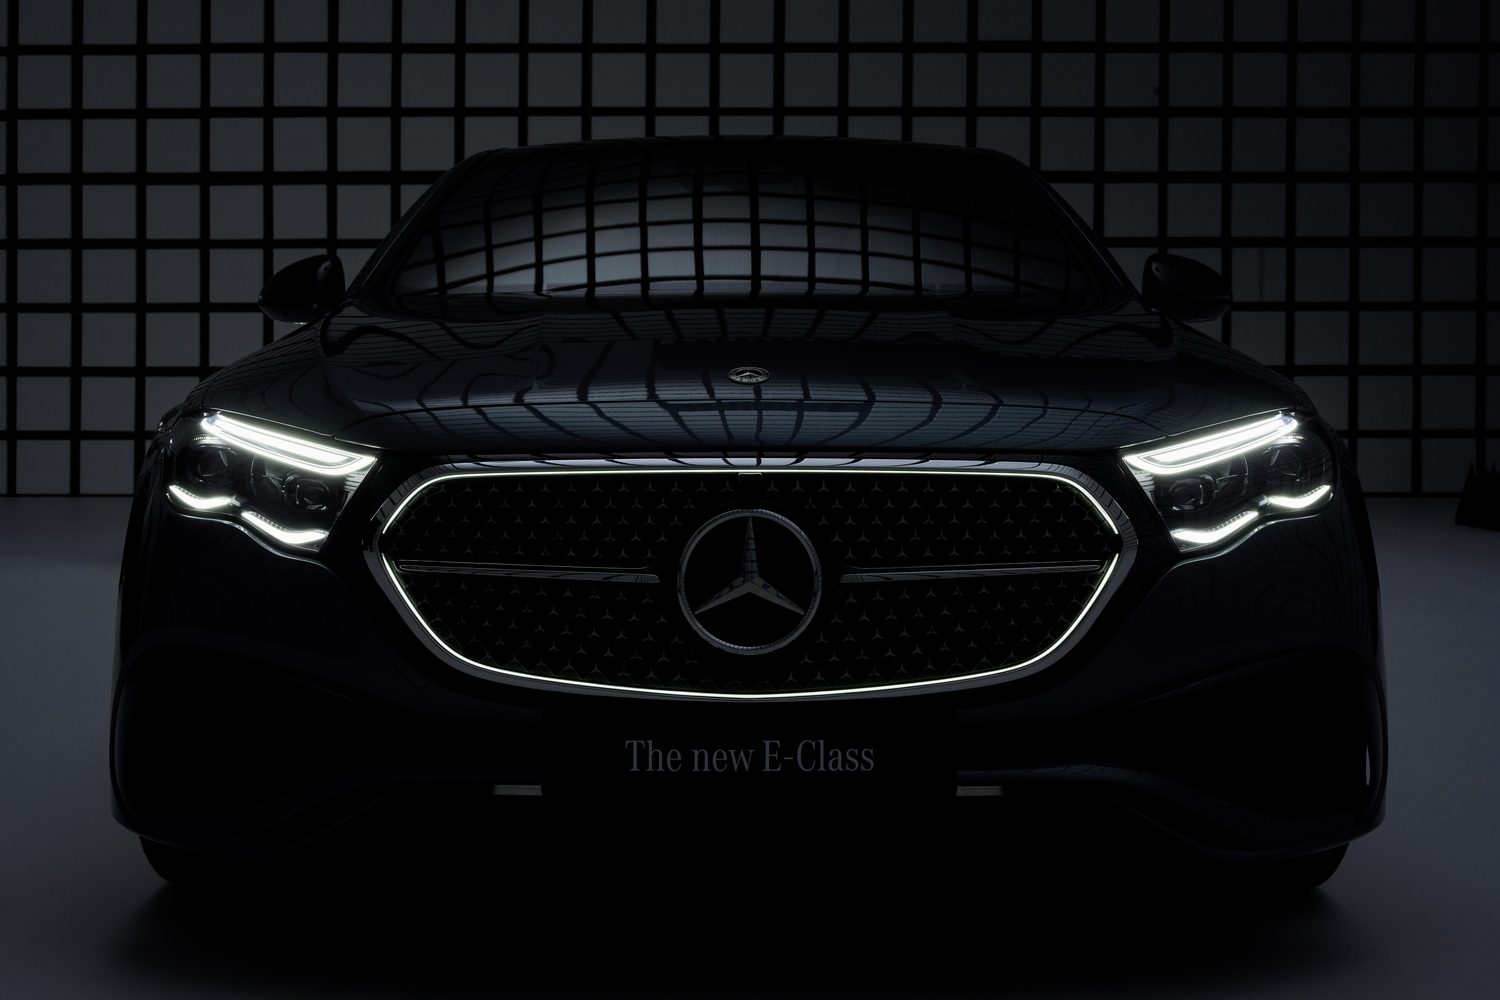 Mercedes E-Class gets 115km electric range